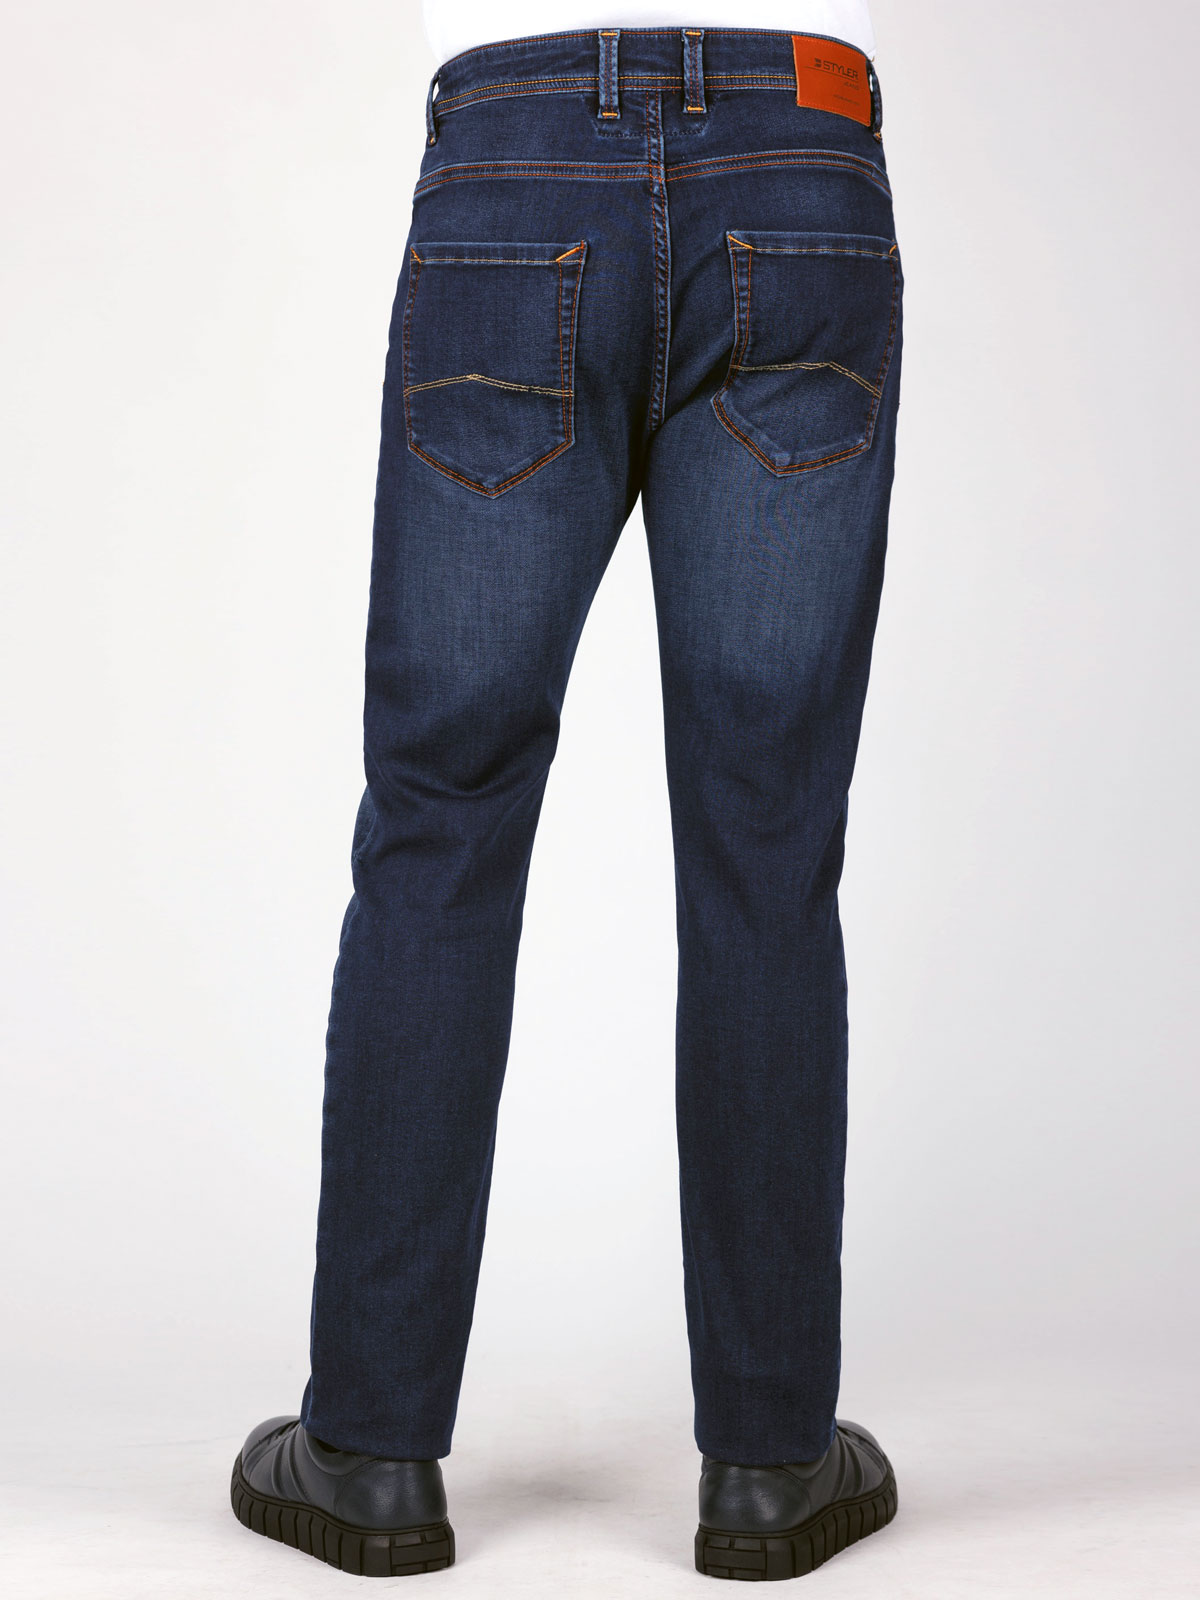 Jeans in dark blue color - 62164 € 61.30 img3